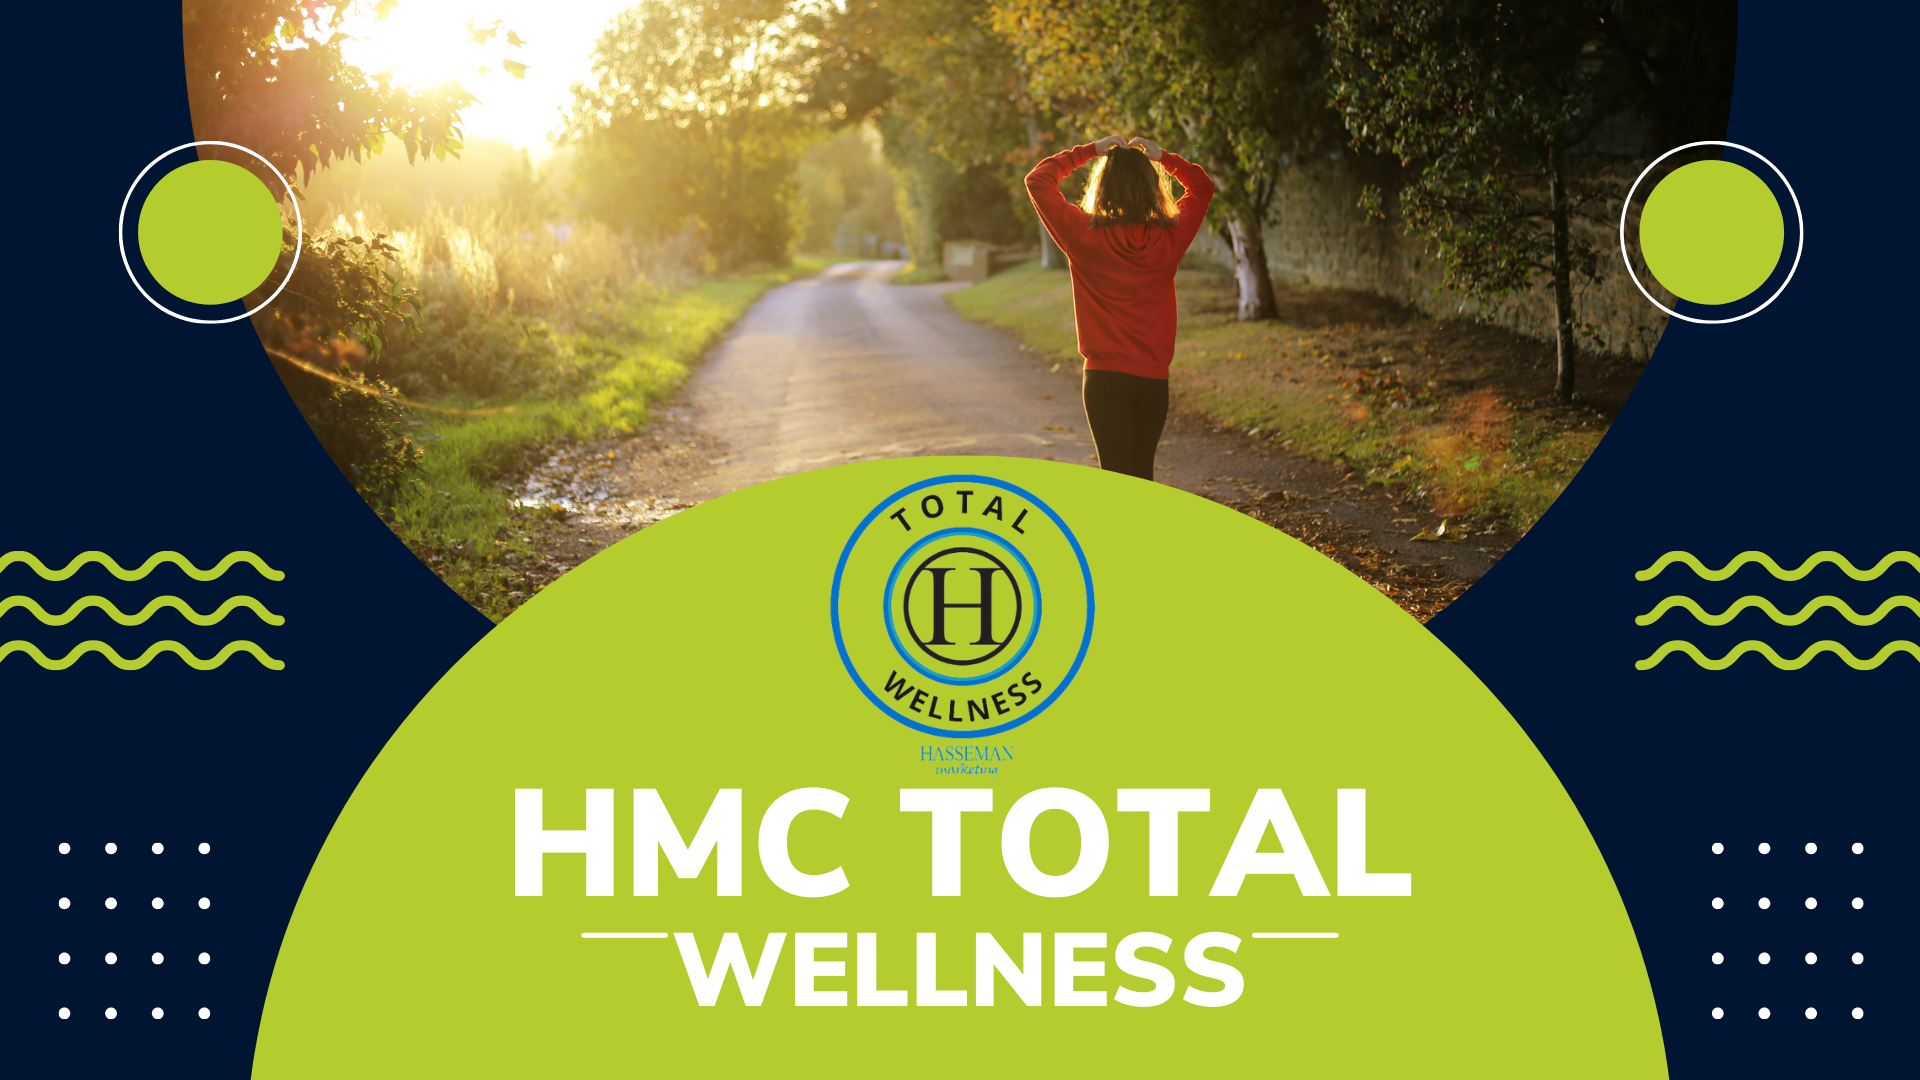 HMC Total Wellness Program from Hasseman Marketing